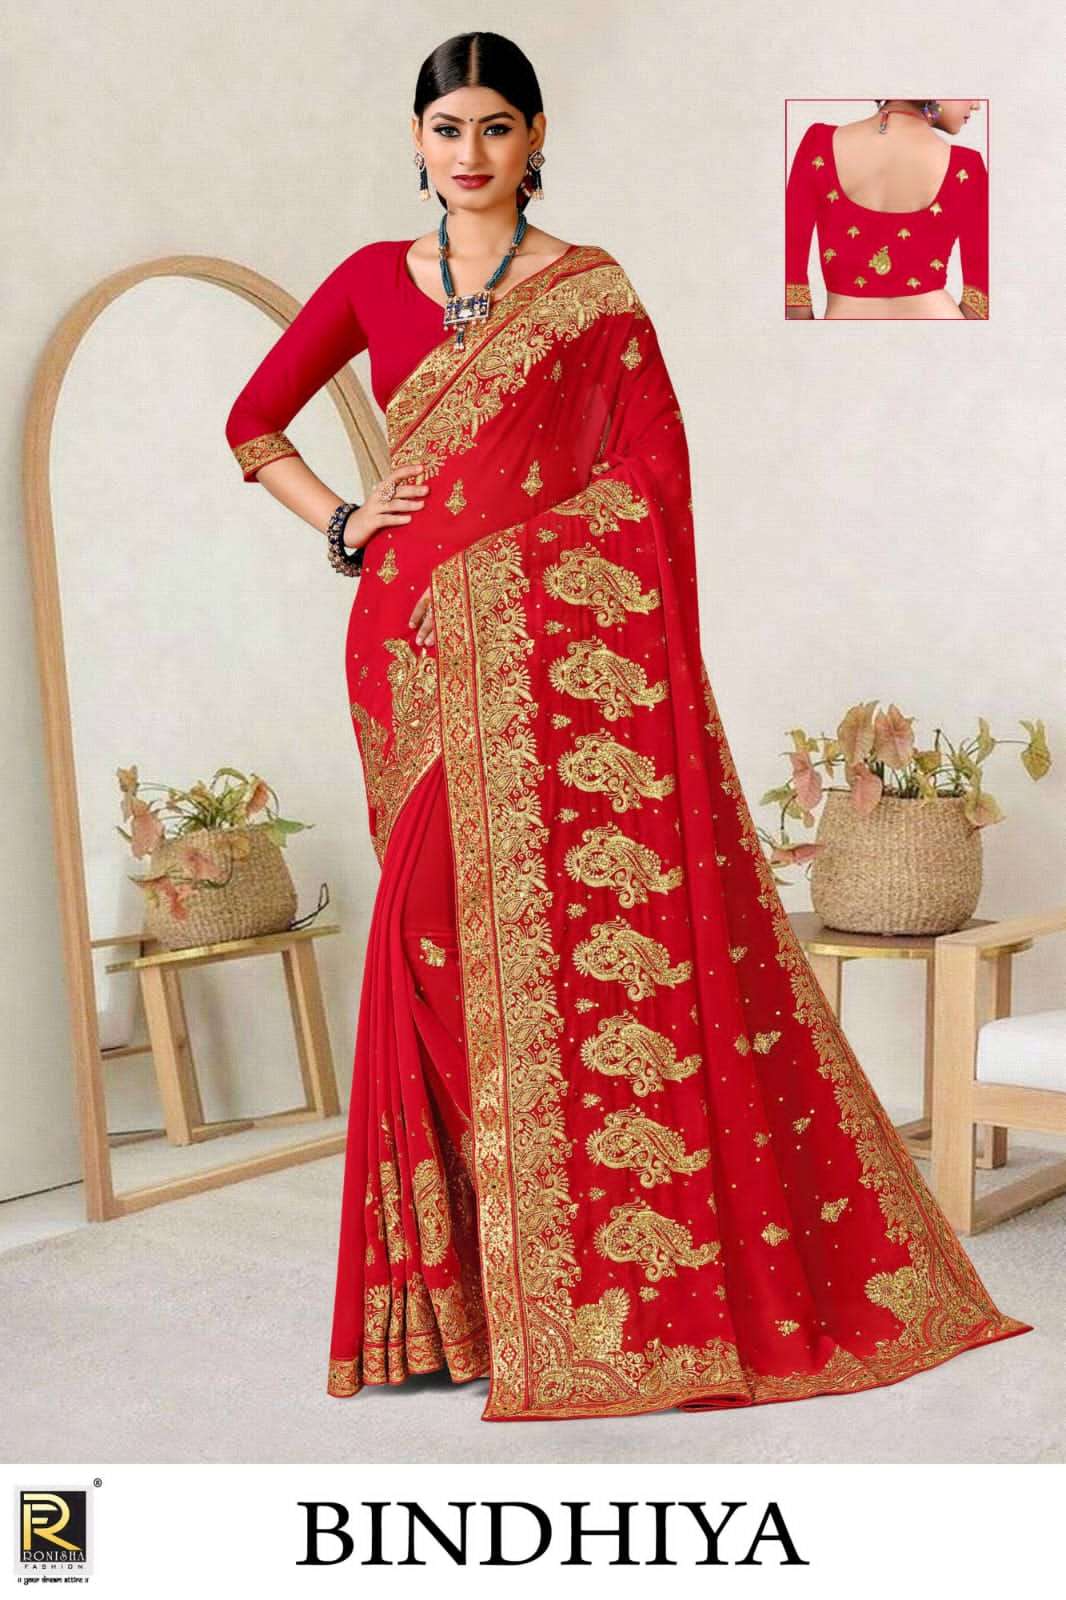 Bindhiya by ranjna saree red special wedding saree collection 